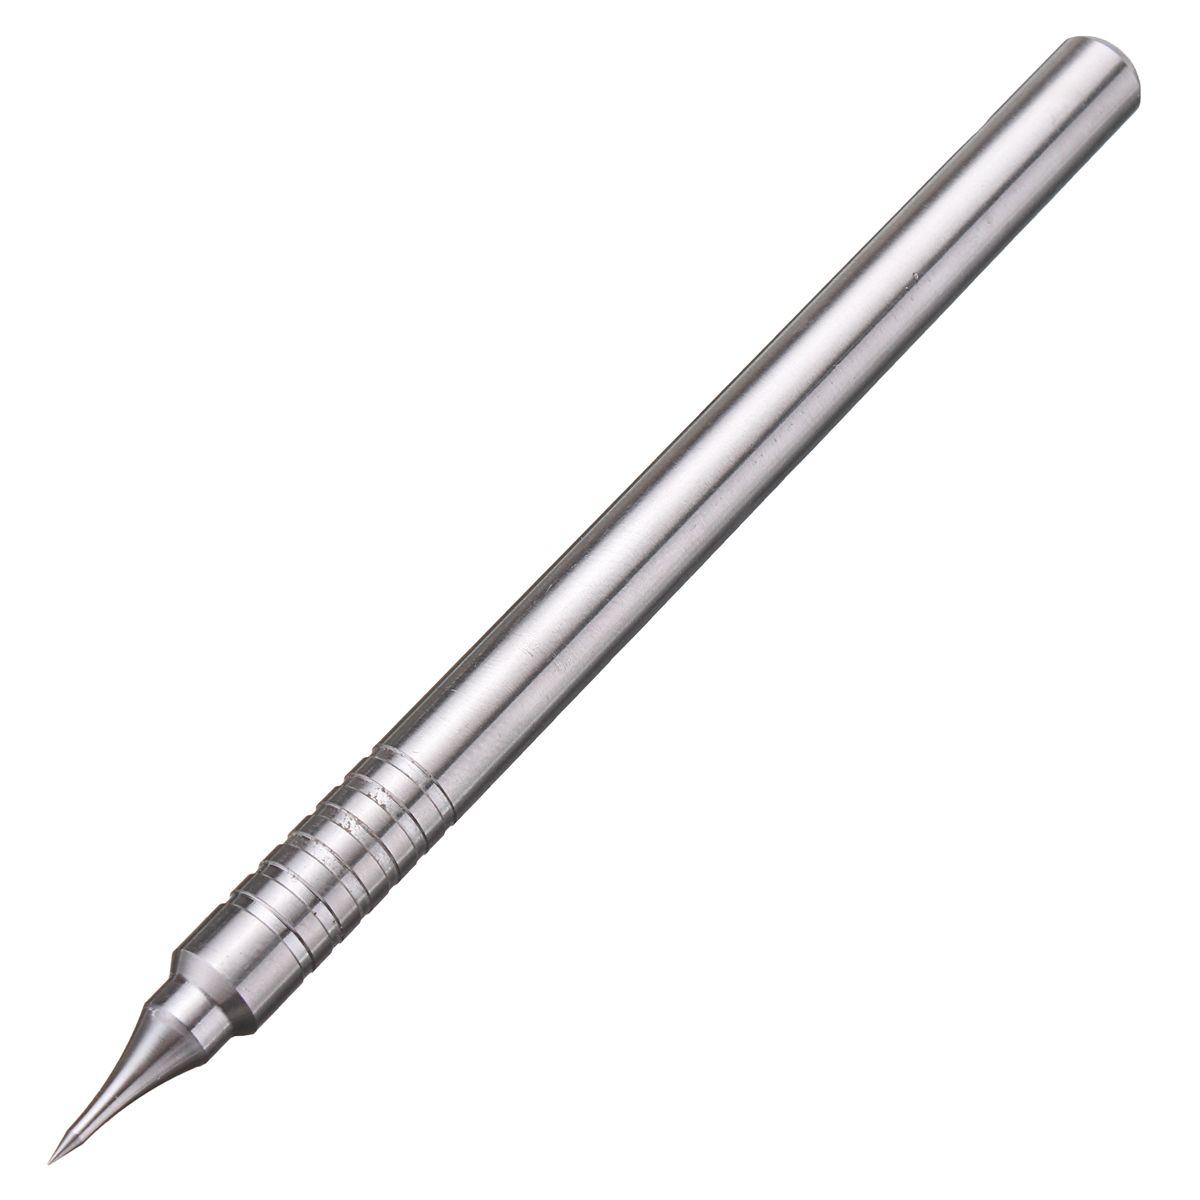 Scriber-Craft-Tool-Scribe-Line-Pen-Model-Tools-for-Plane-Gundam-1149309